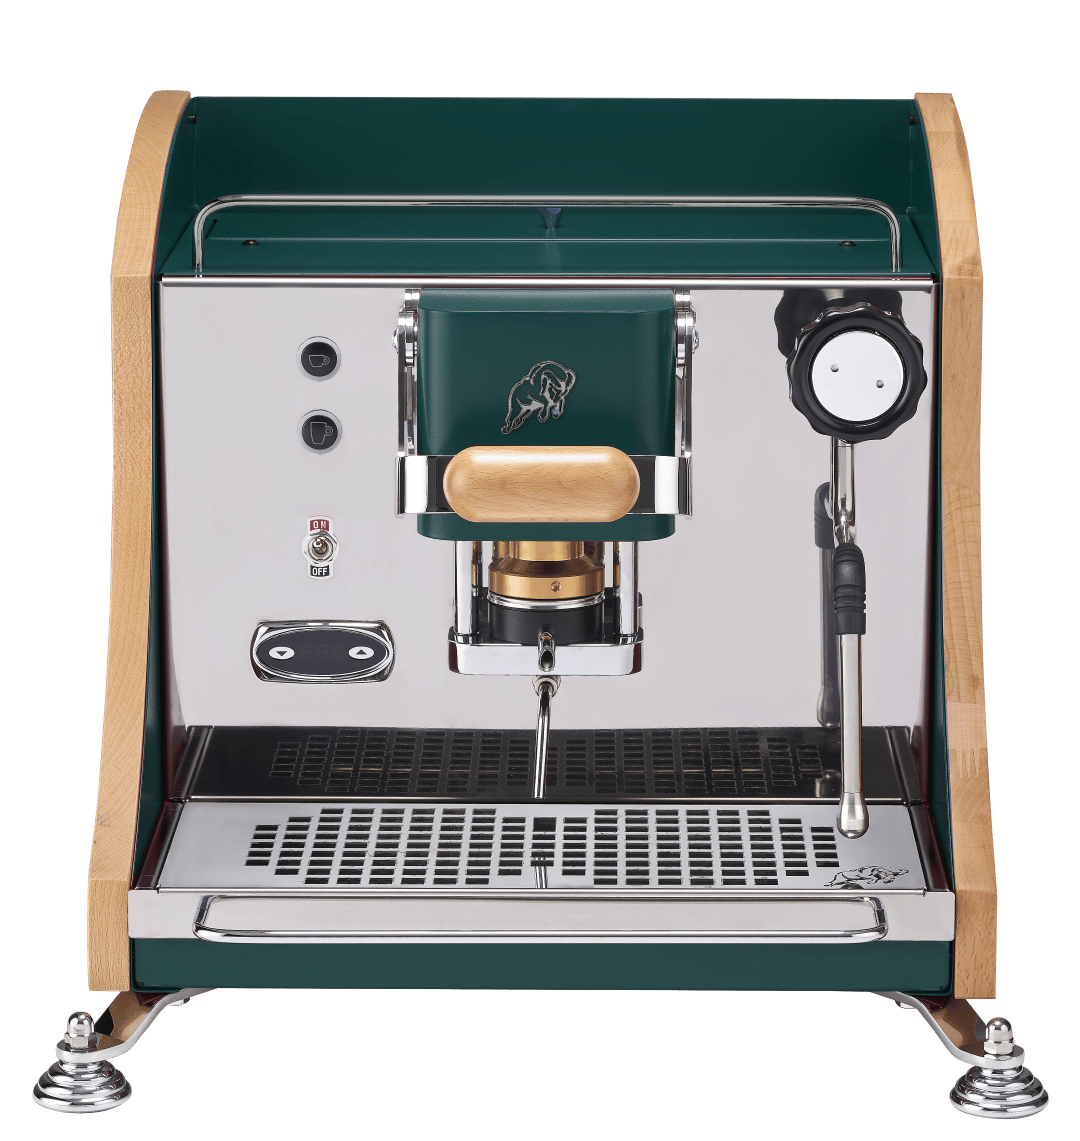 Agenta 1.0 With Vapor (1 Group) Coffee Machine